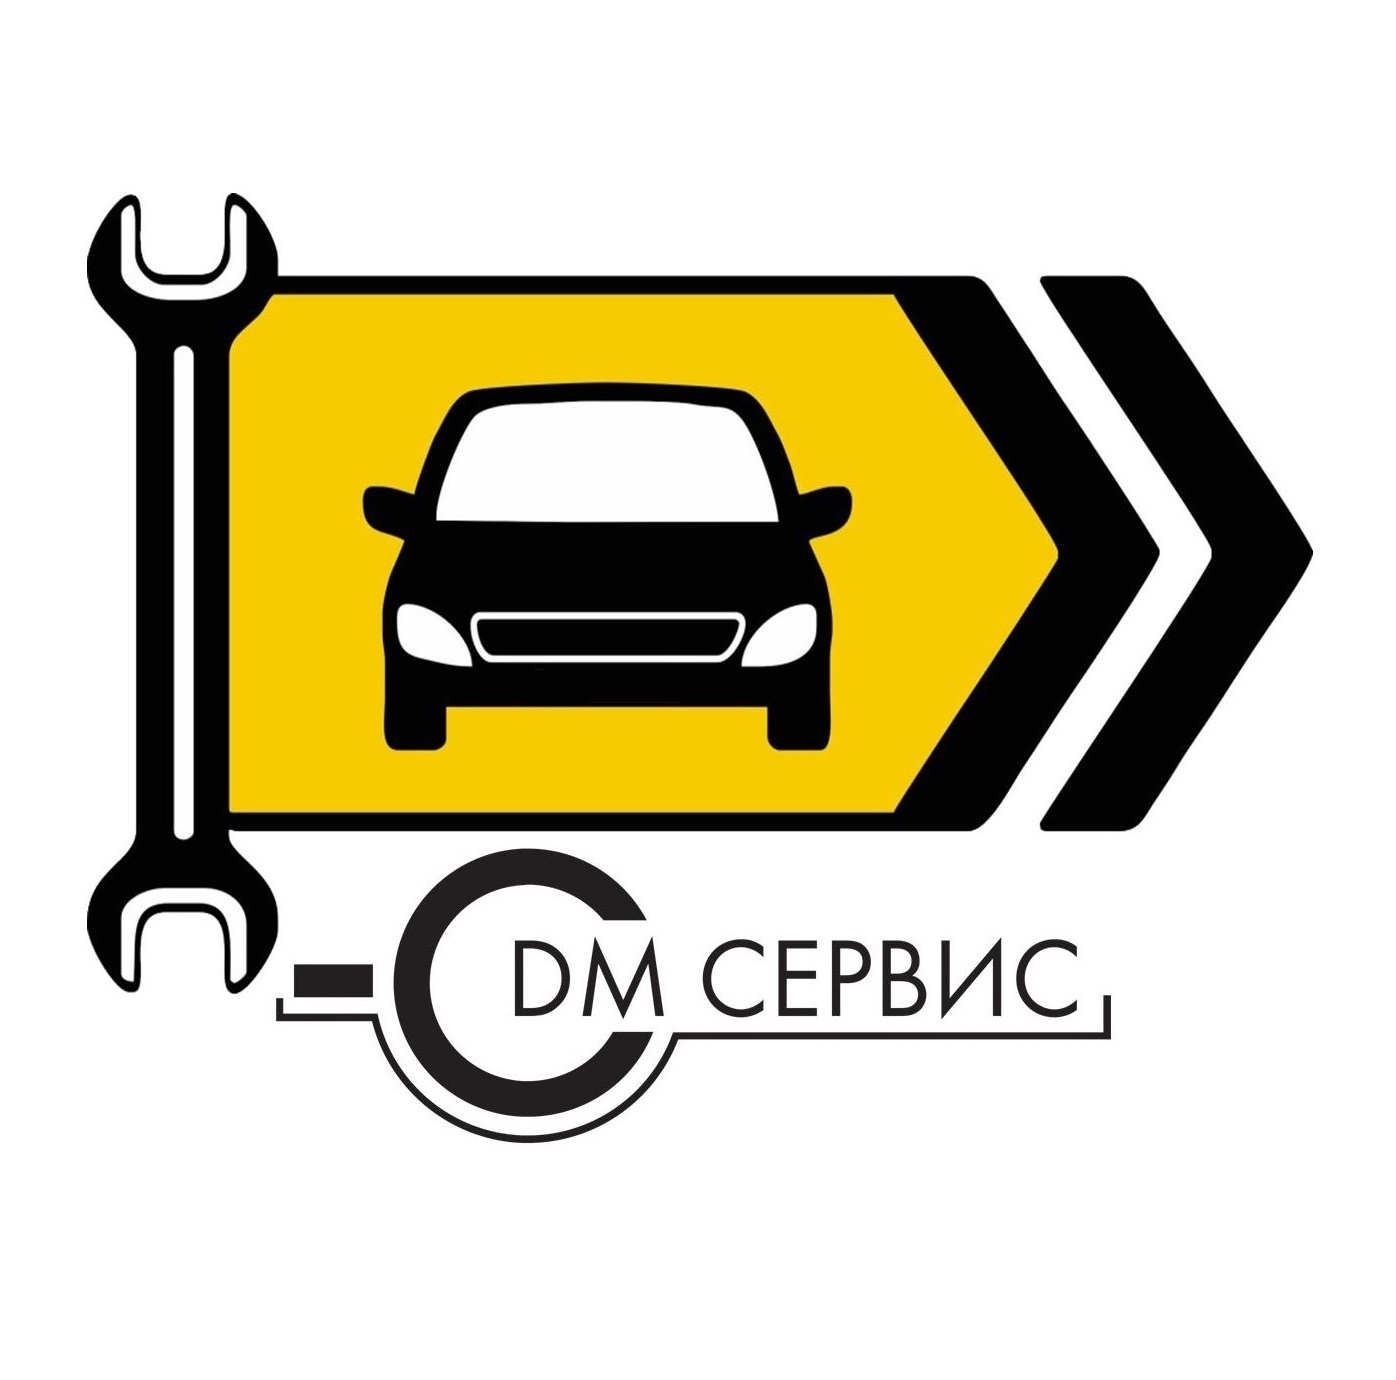 Дм сервис. Дон Моторс логотип. Дм-сервис Челябинск. DM service Колпино.